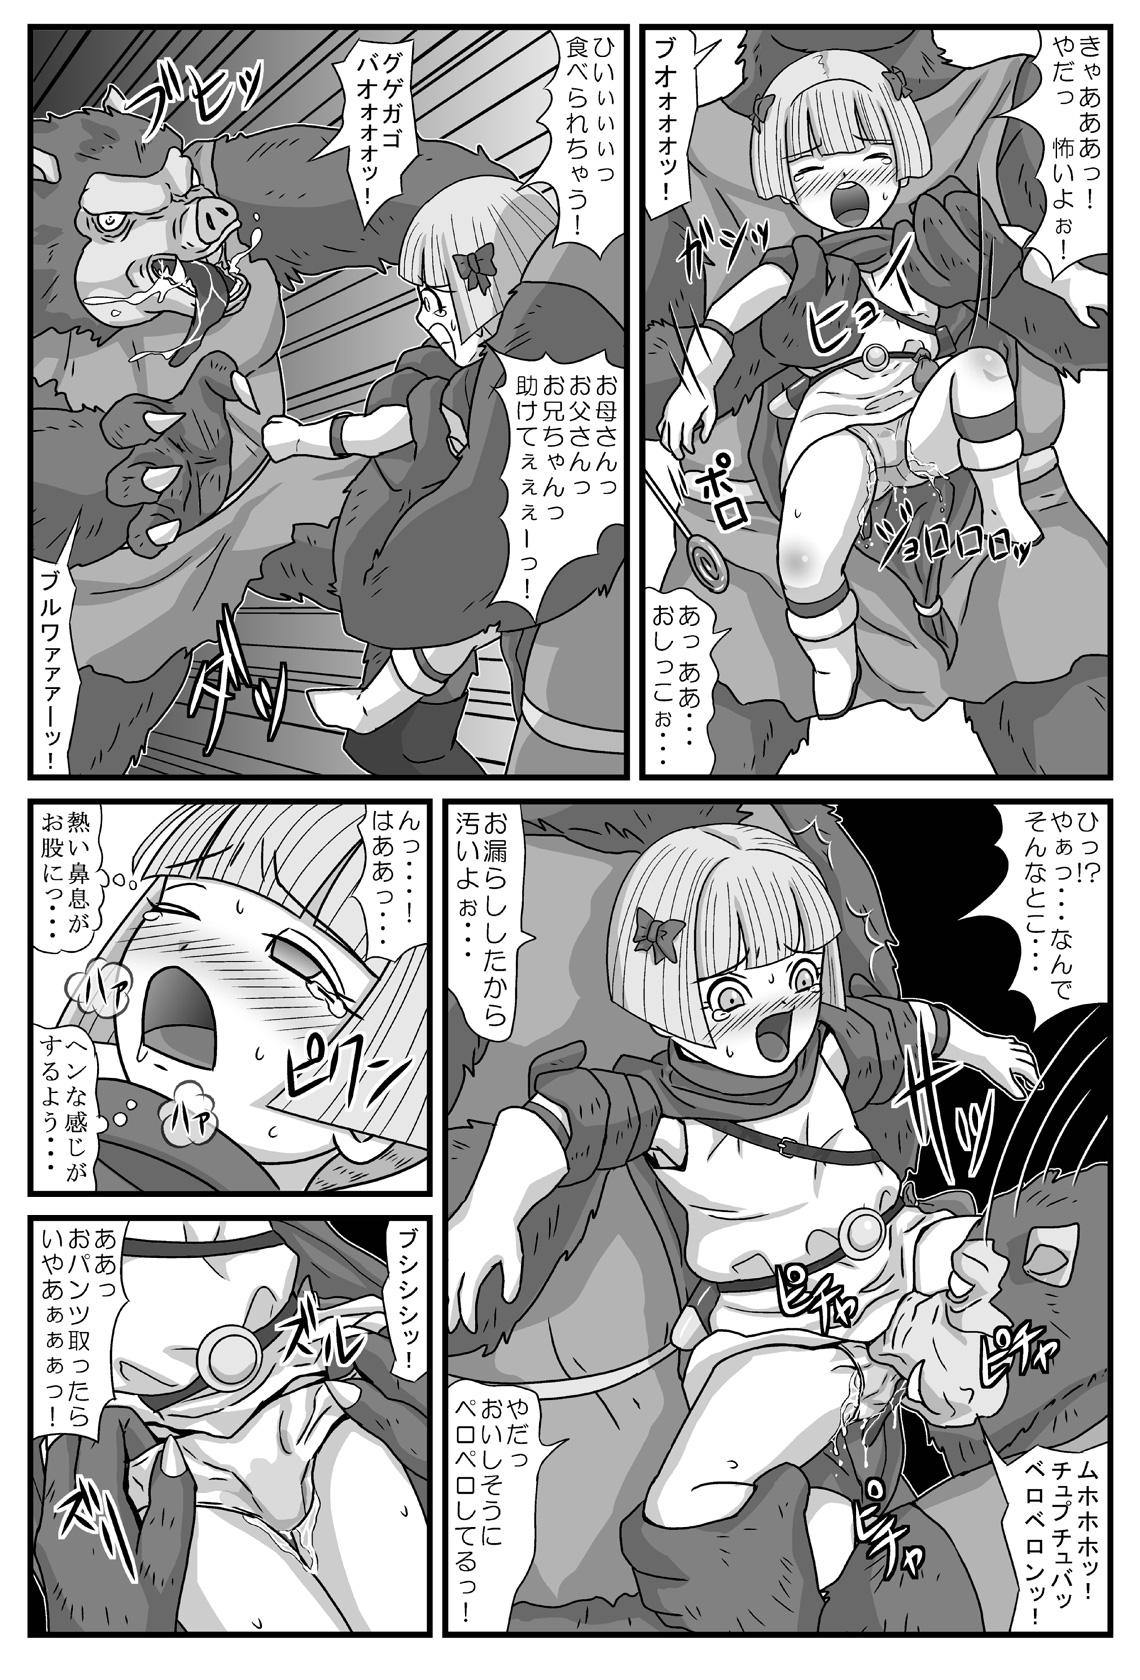 Wam Gangani Kouze - Dragon quest v Wam - Page 5